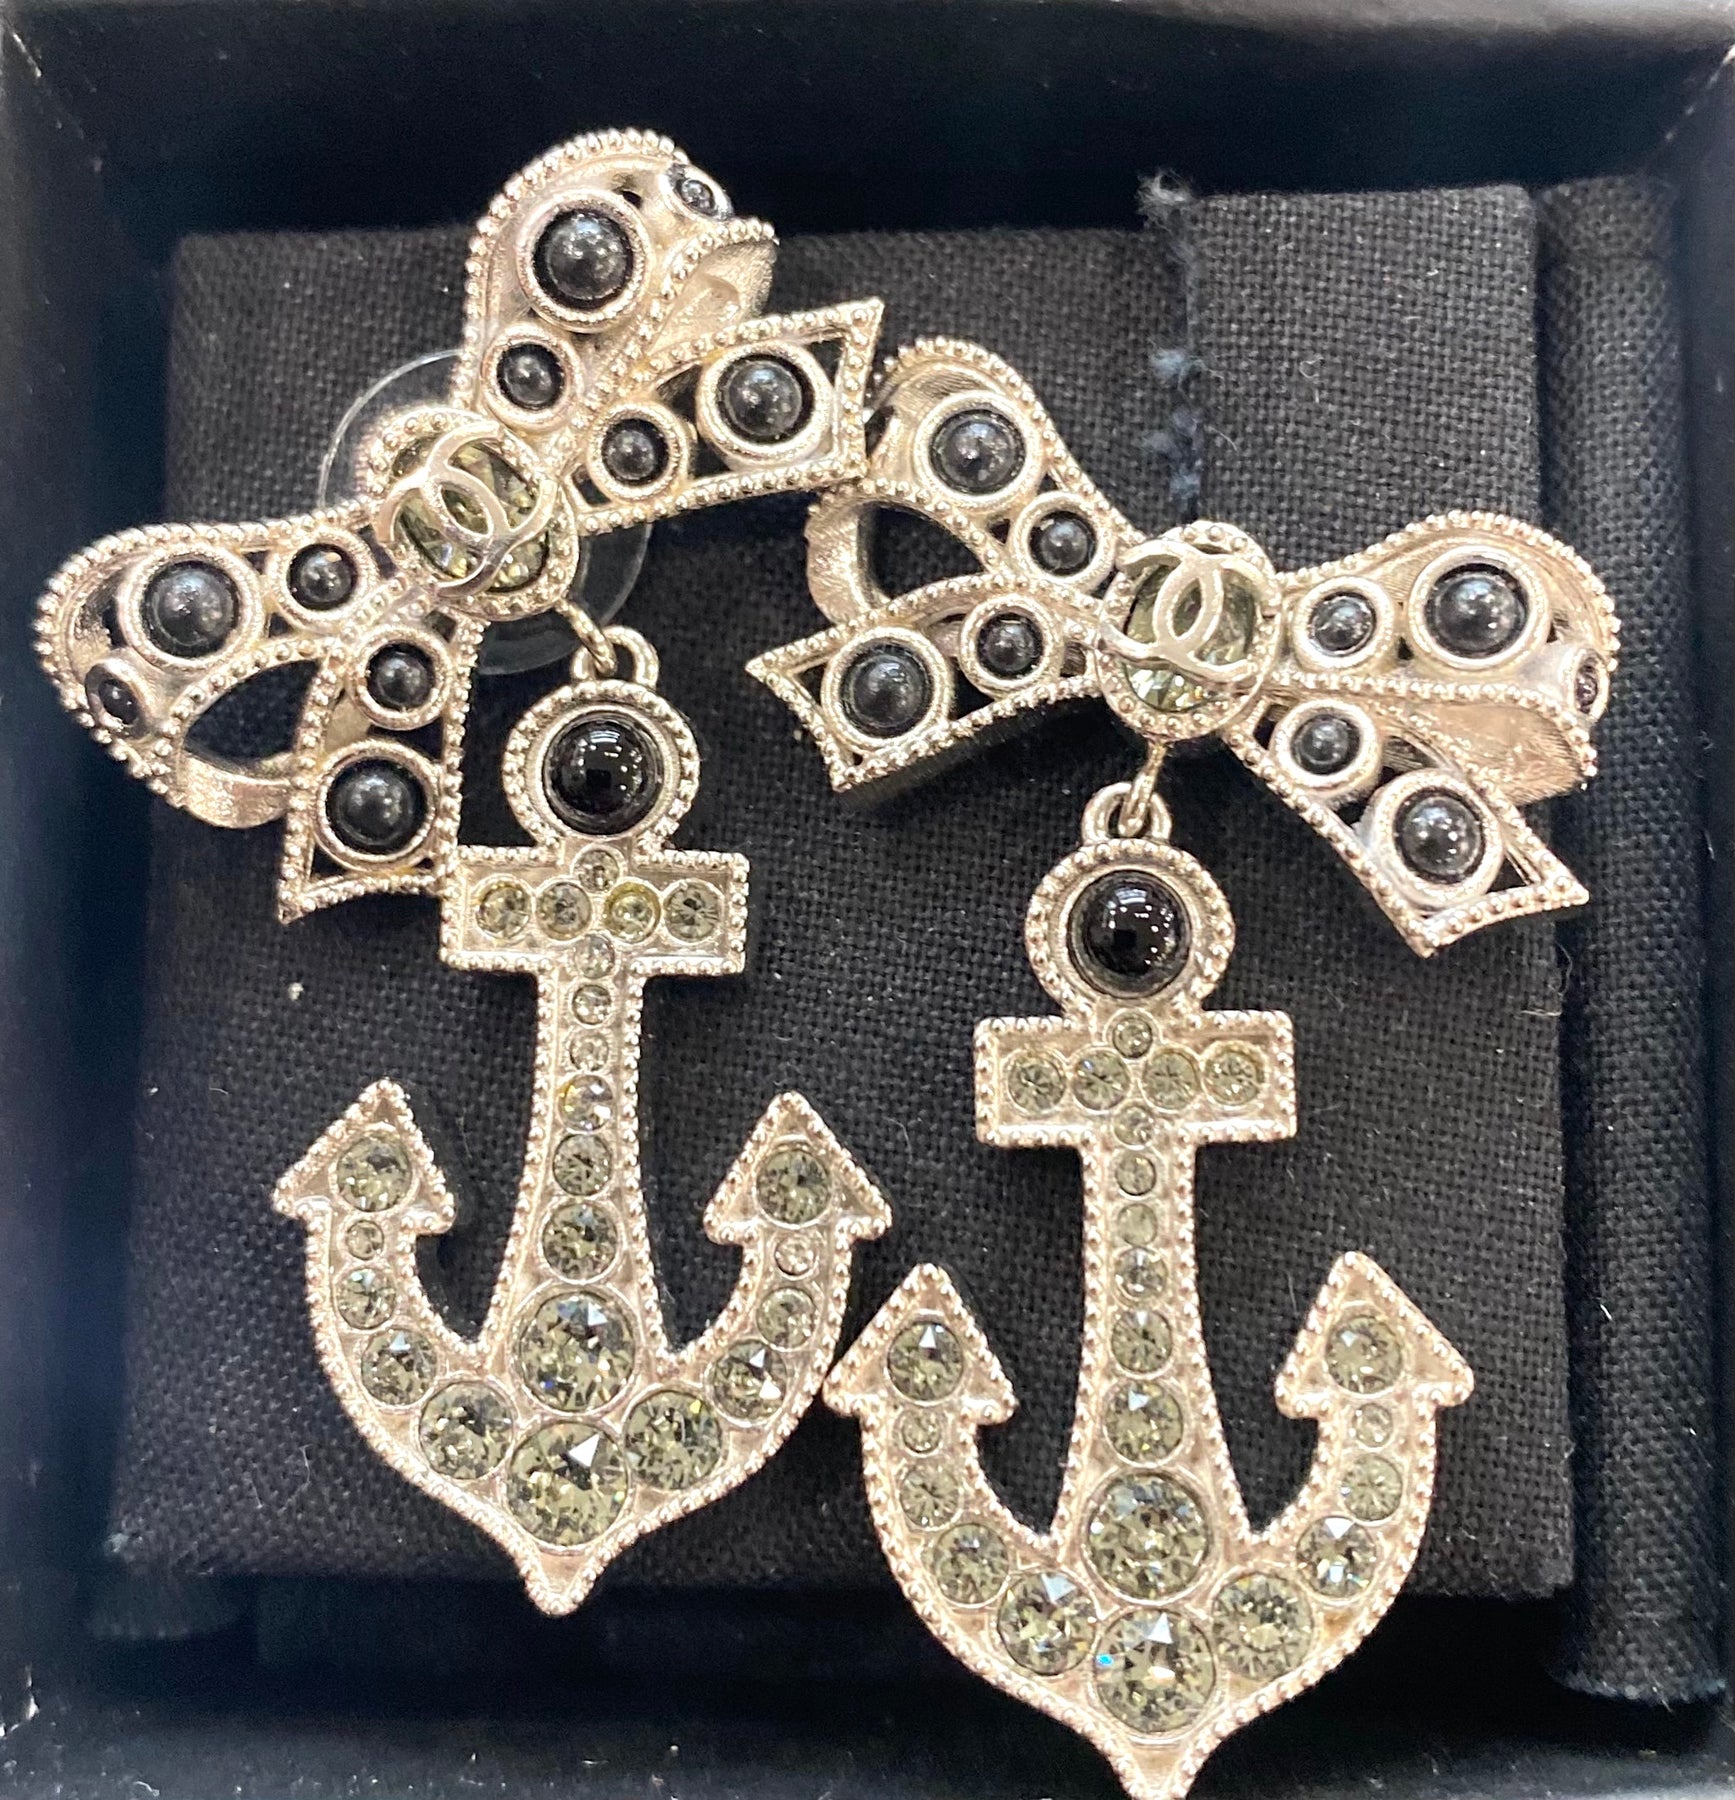 CHANEL Crystal Pearl CC Drop Earrings Gold 1261528